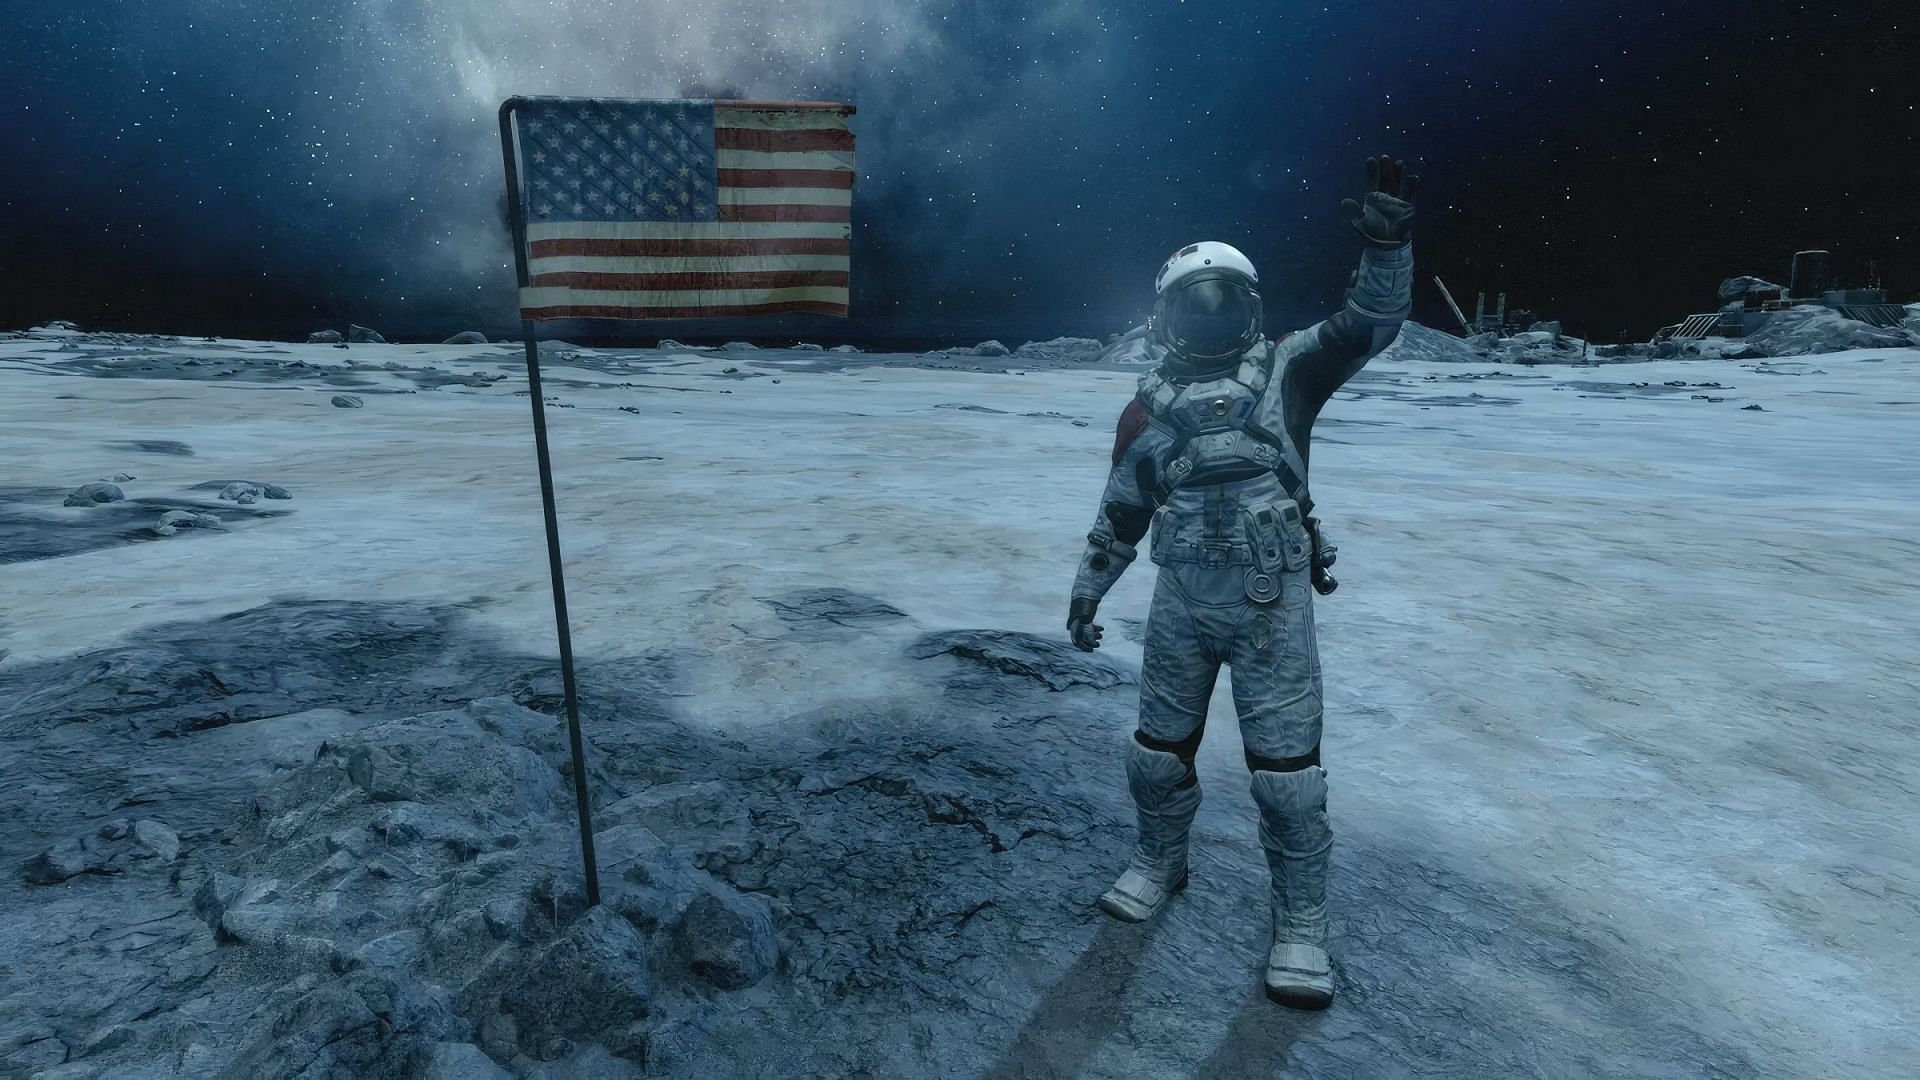 Apollo moon landing site